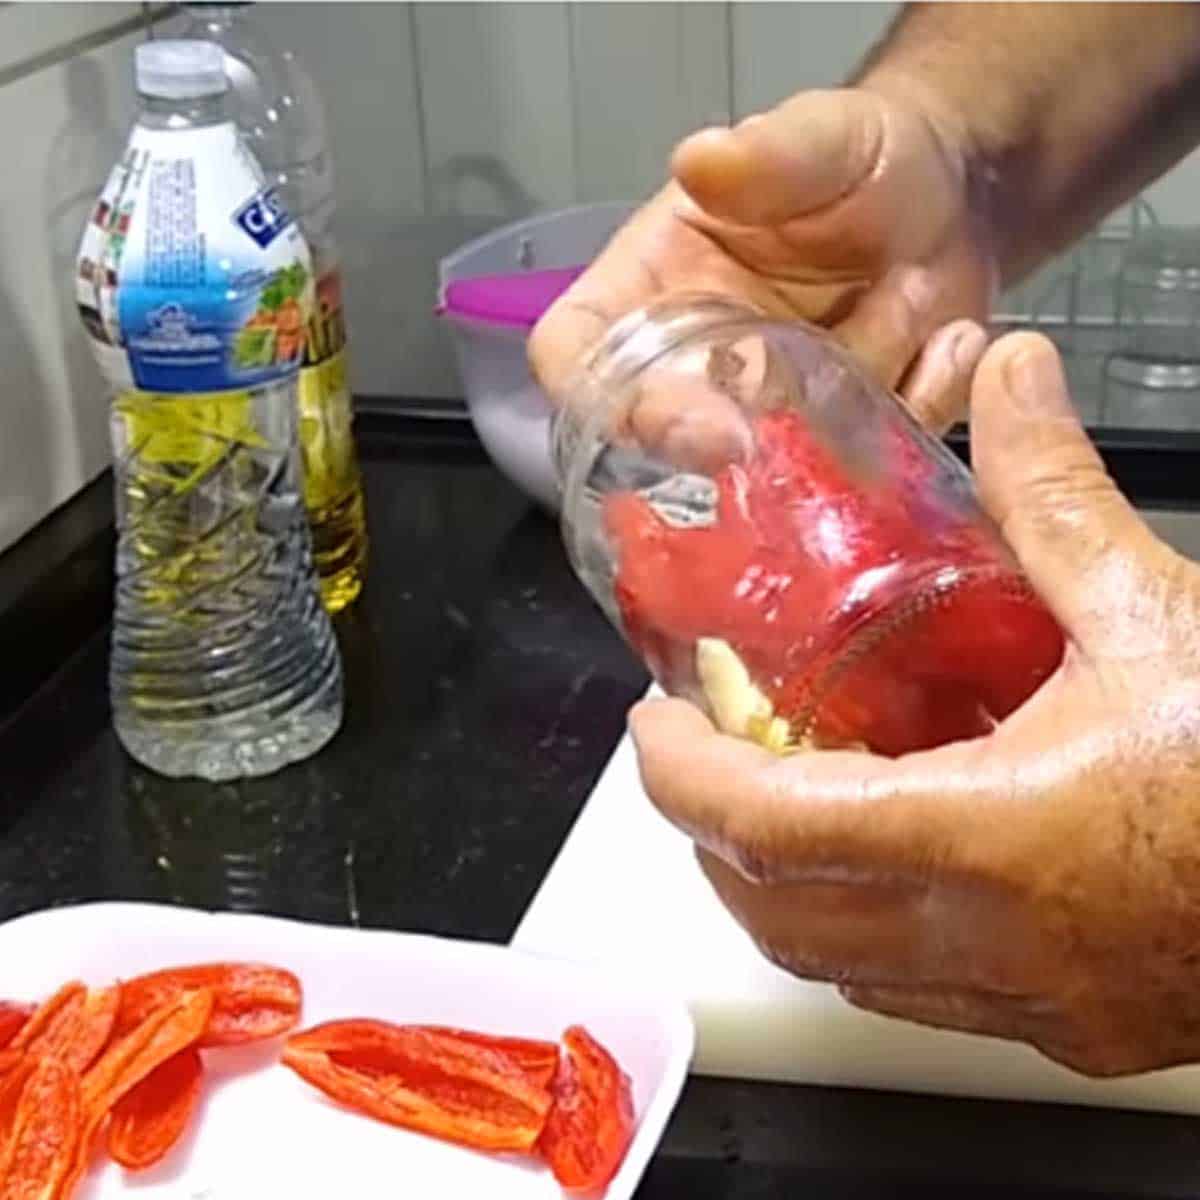 acomodando as pimentas no pote de vidro